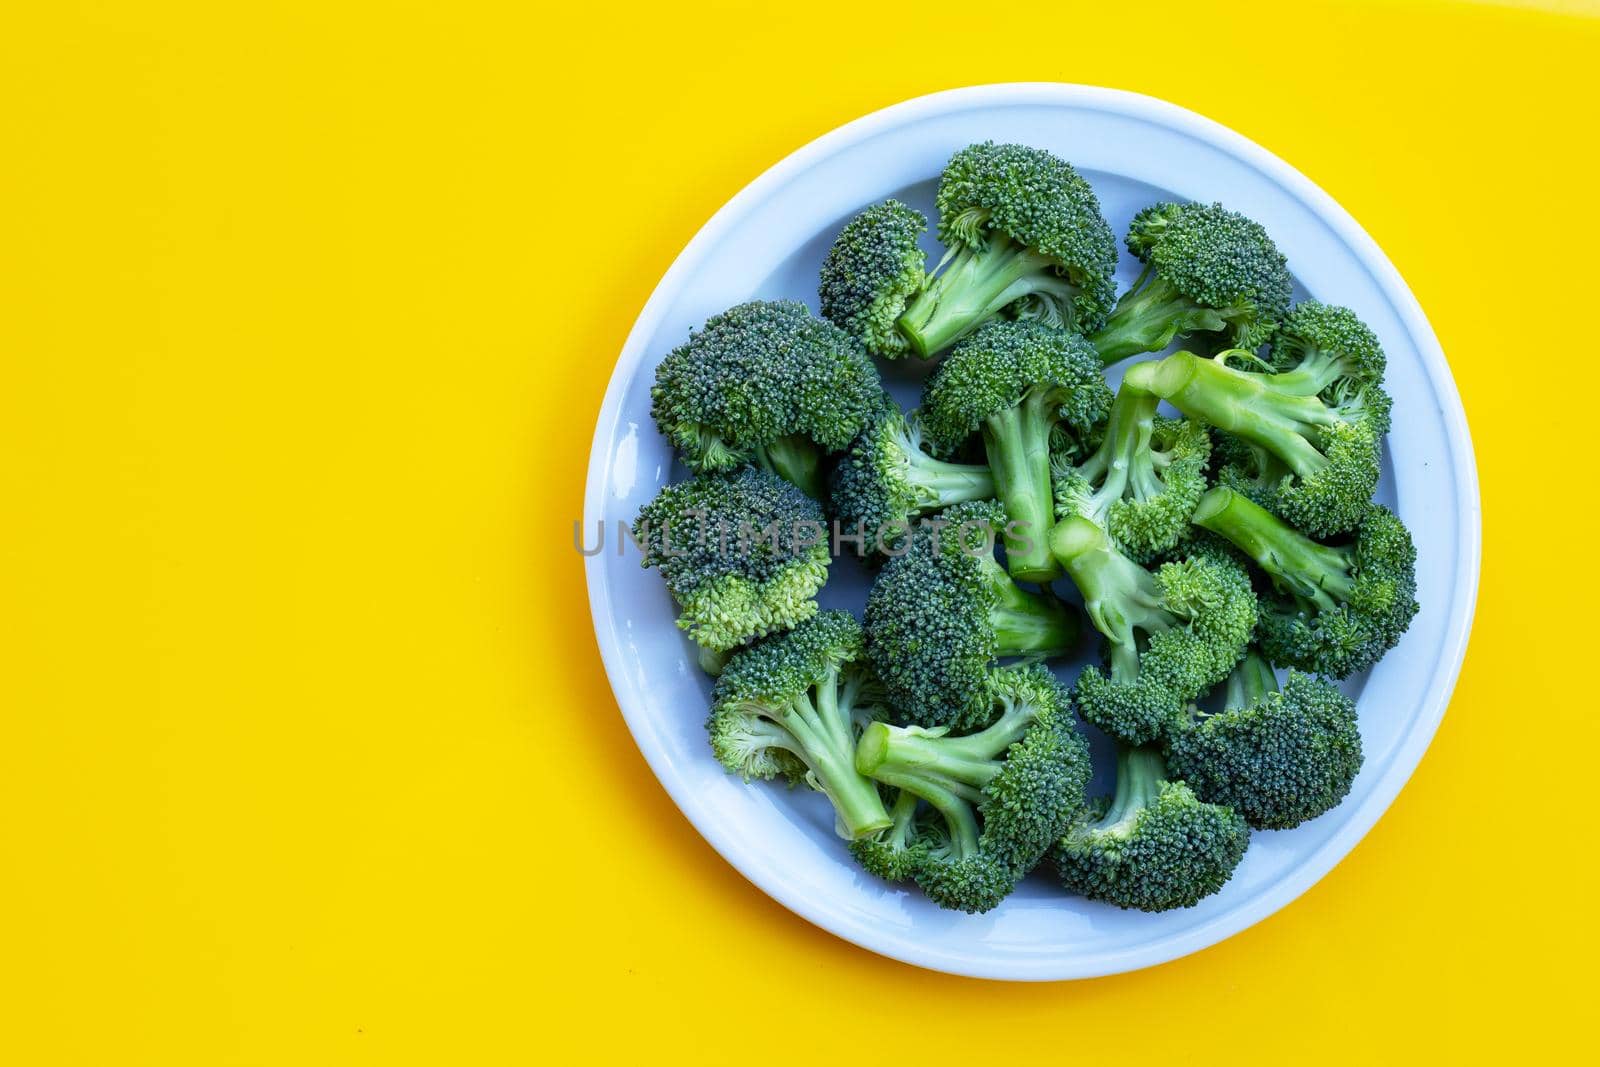 Fresh green broccoli on yellow background. by Bowonpat